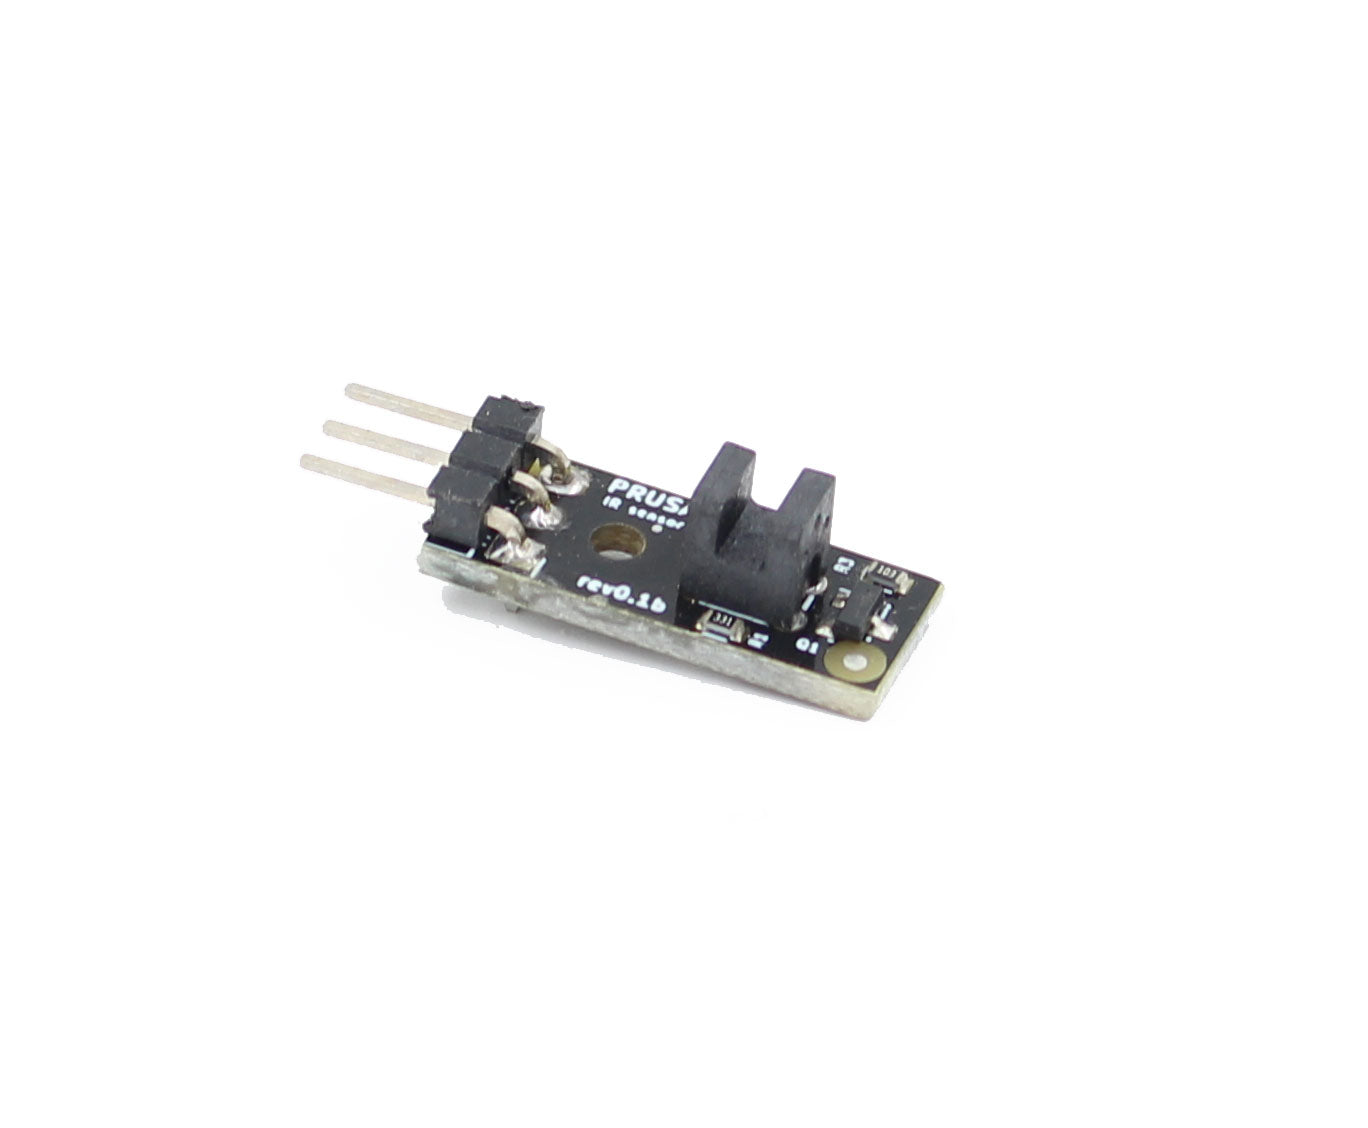 Spider - IR Filament Sensor for Prusa i3 MK2.5s - MK3s - MK3s+